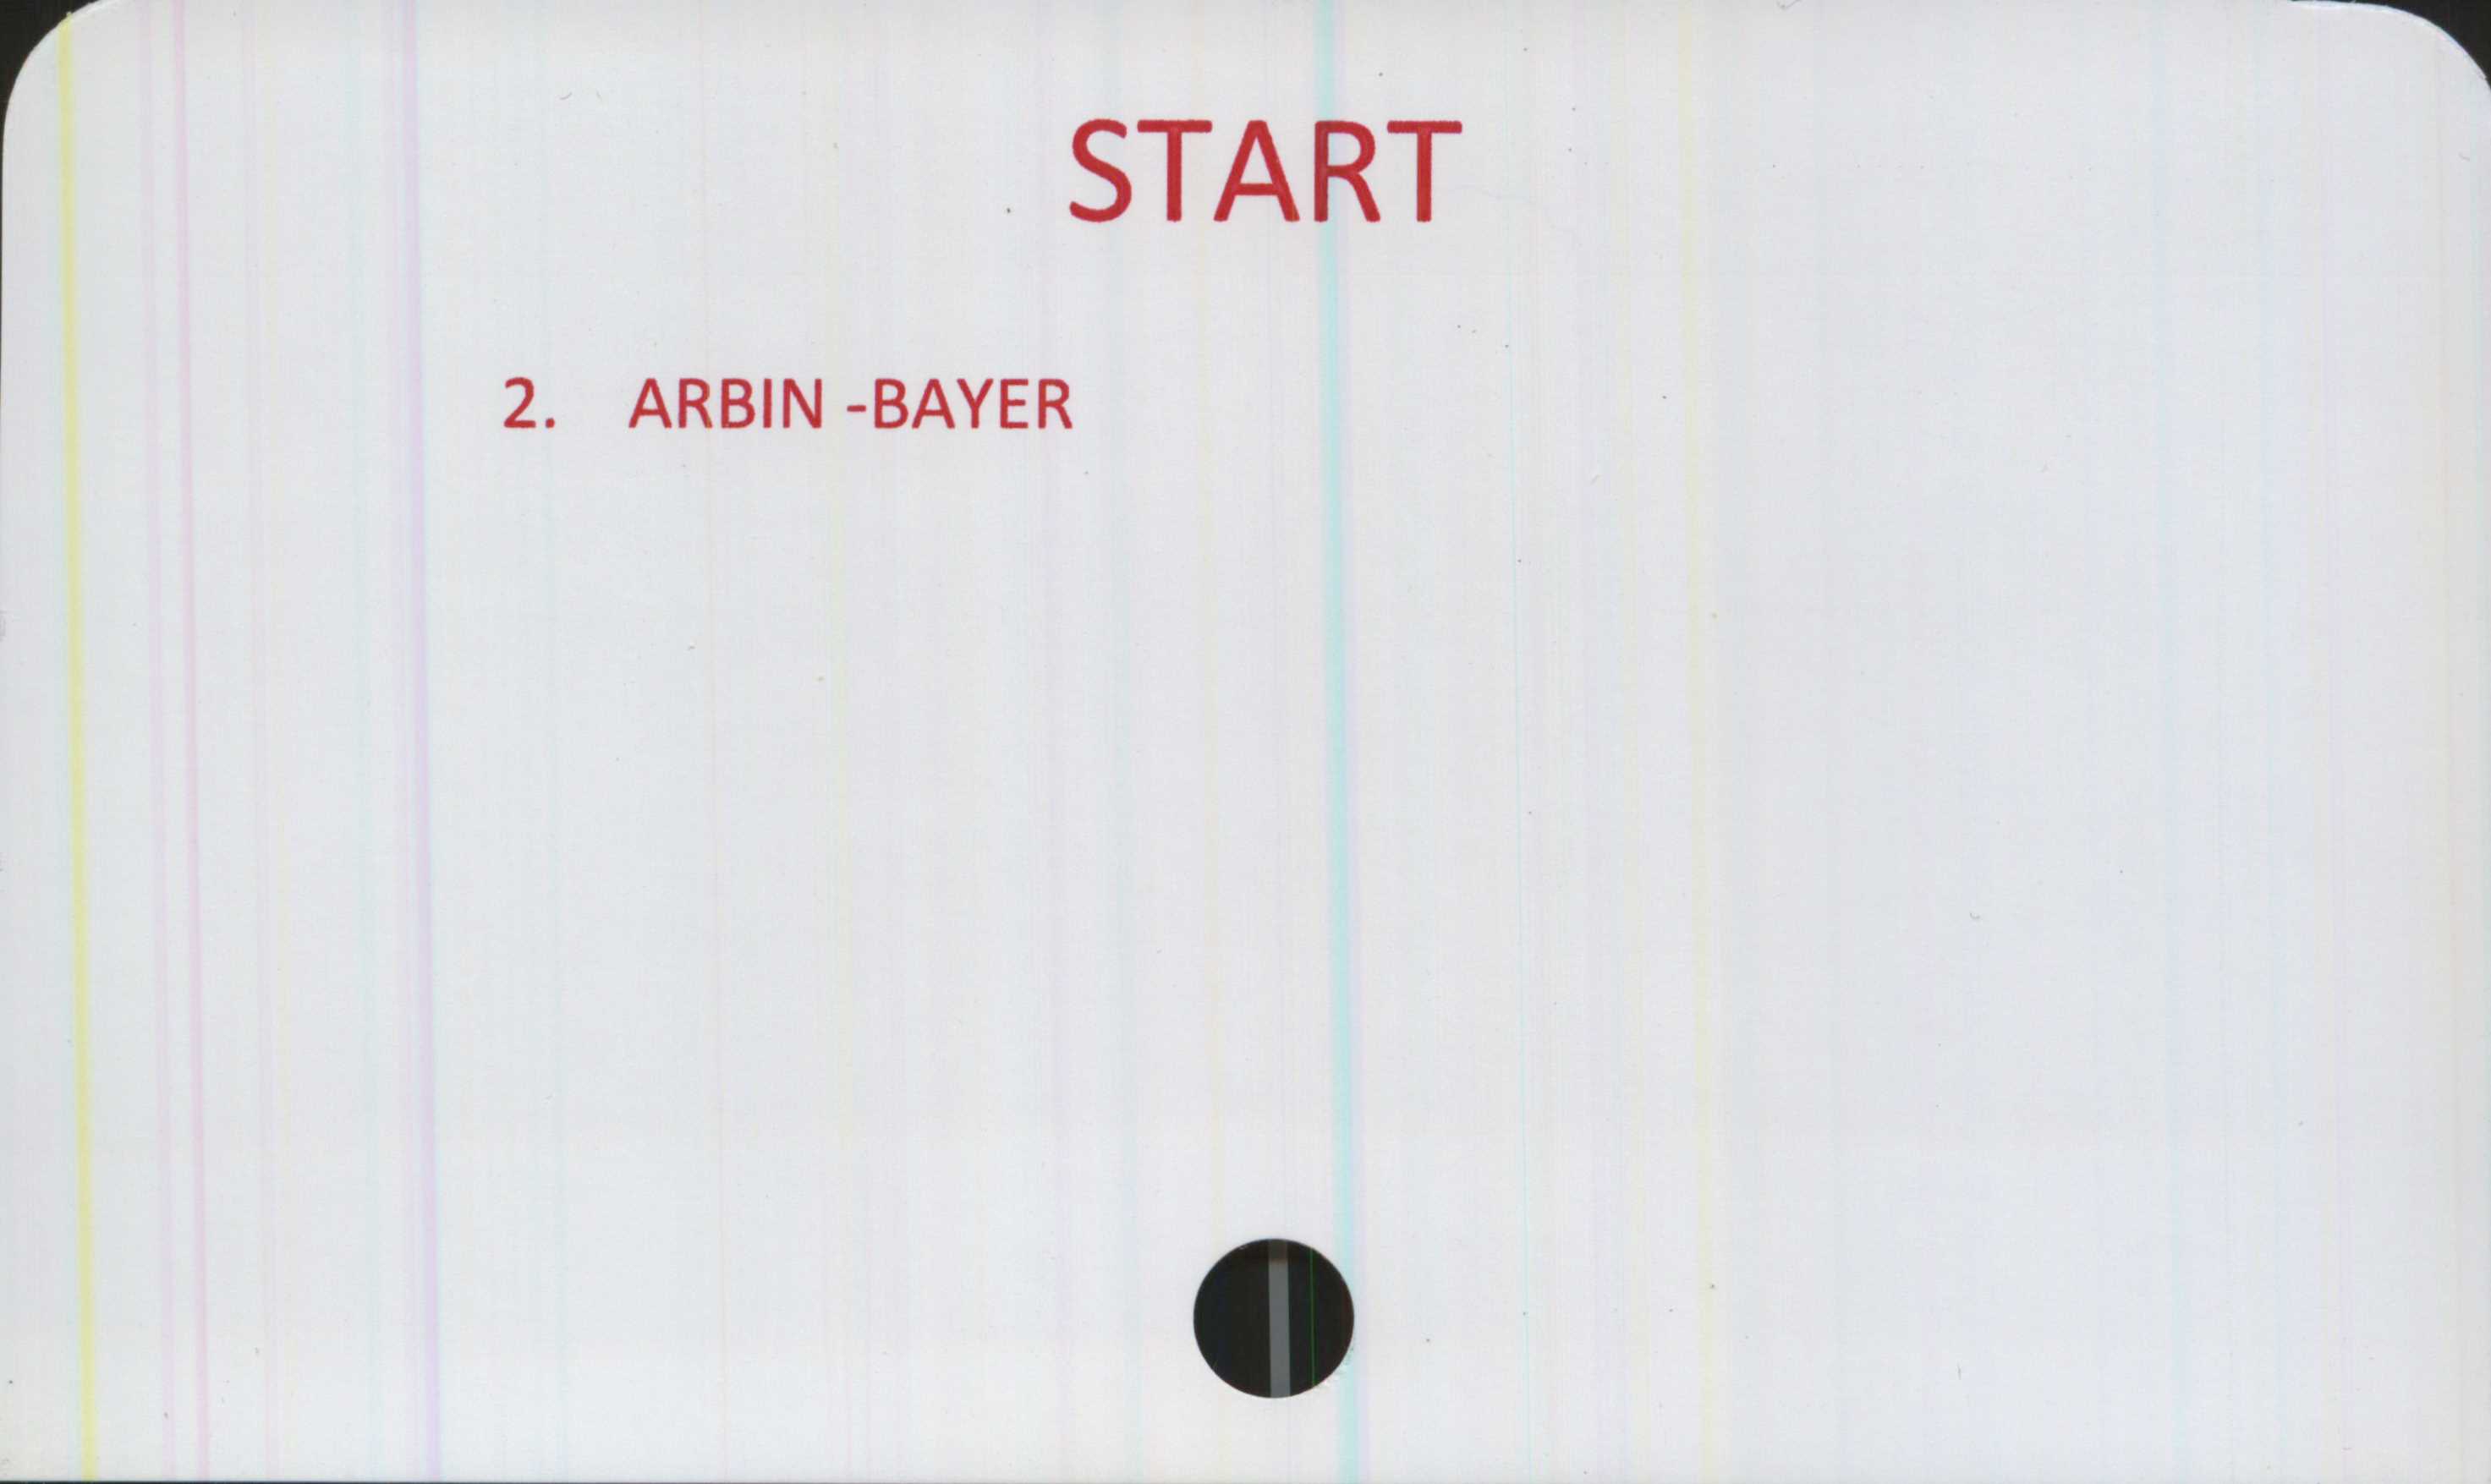 ARBIN -BAYER ﻿START

2. ARBIN -BAYER